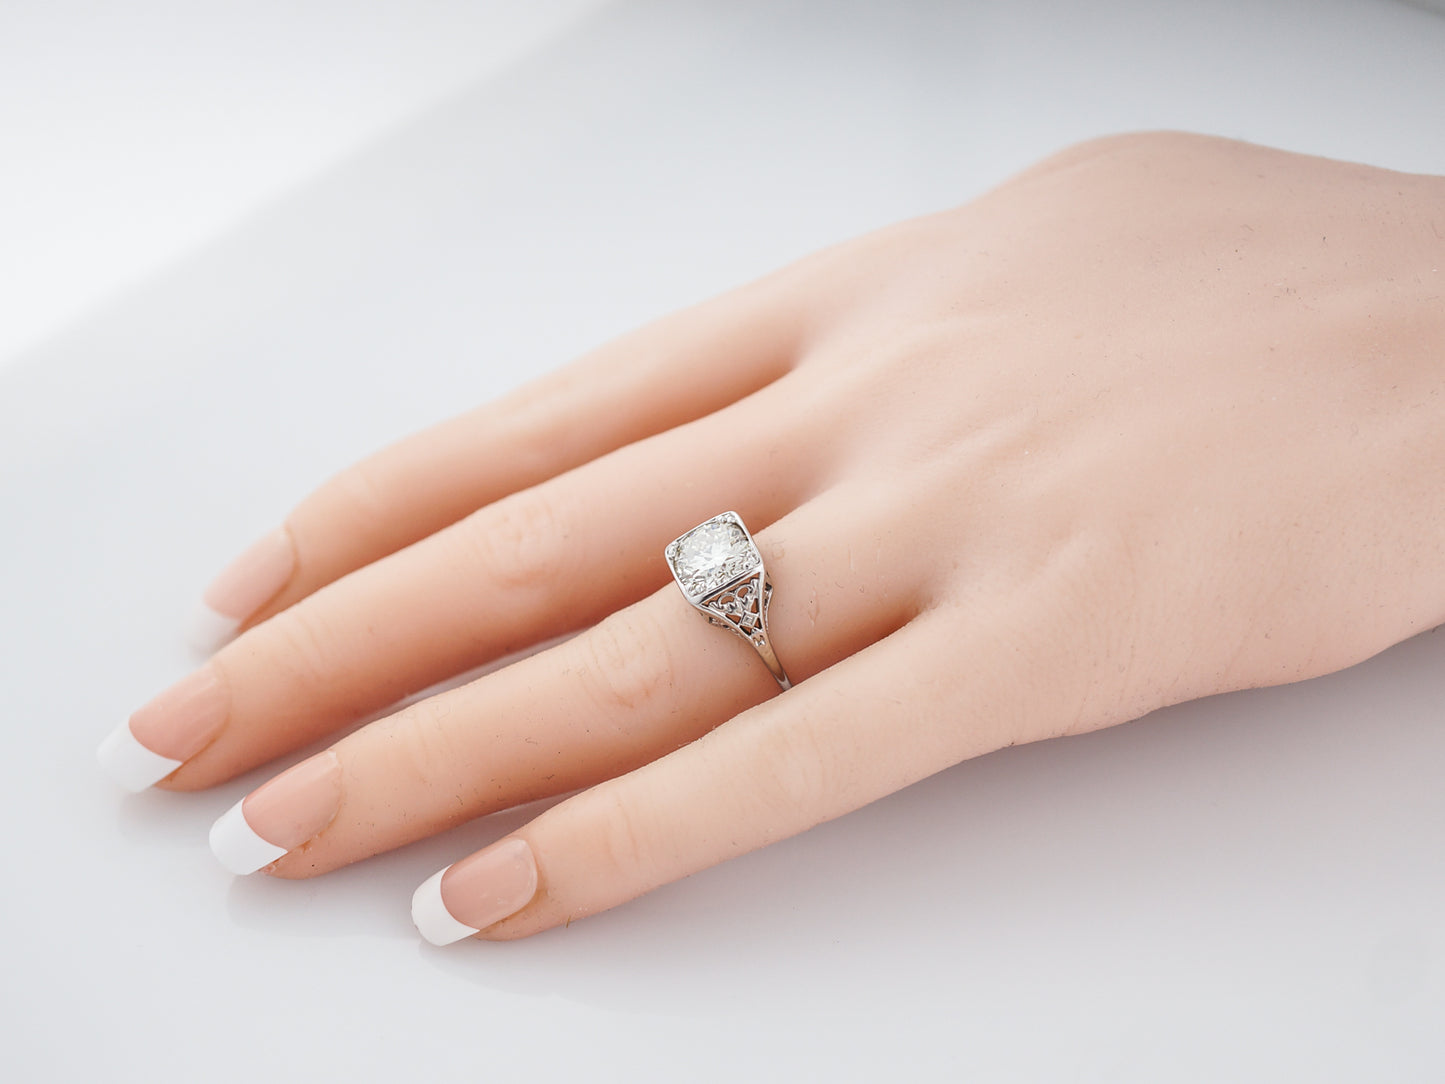 Antique Engagement Ring Art Deco 1.84 Round Brilliant Cut Diamond in 14k White Gold